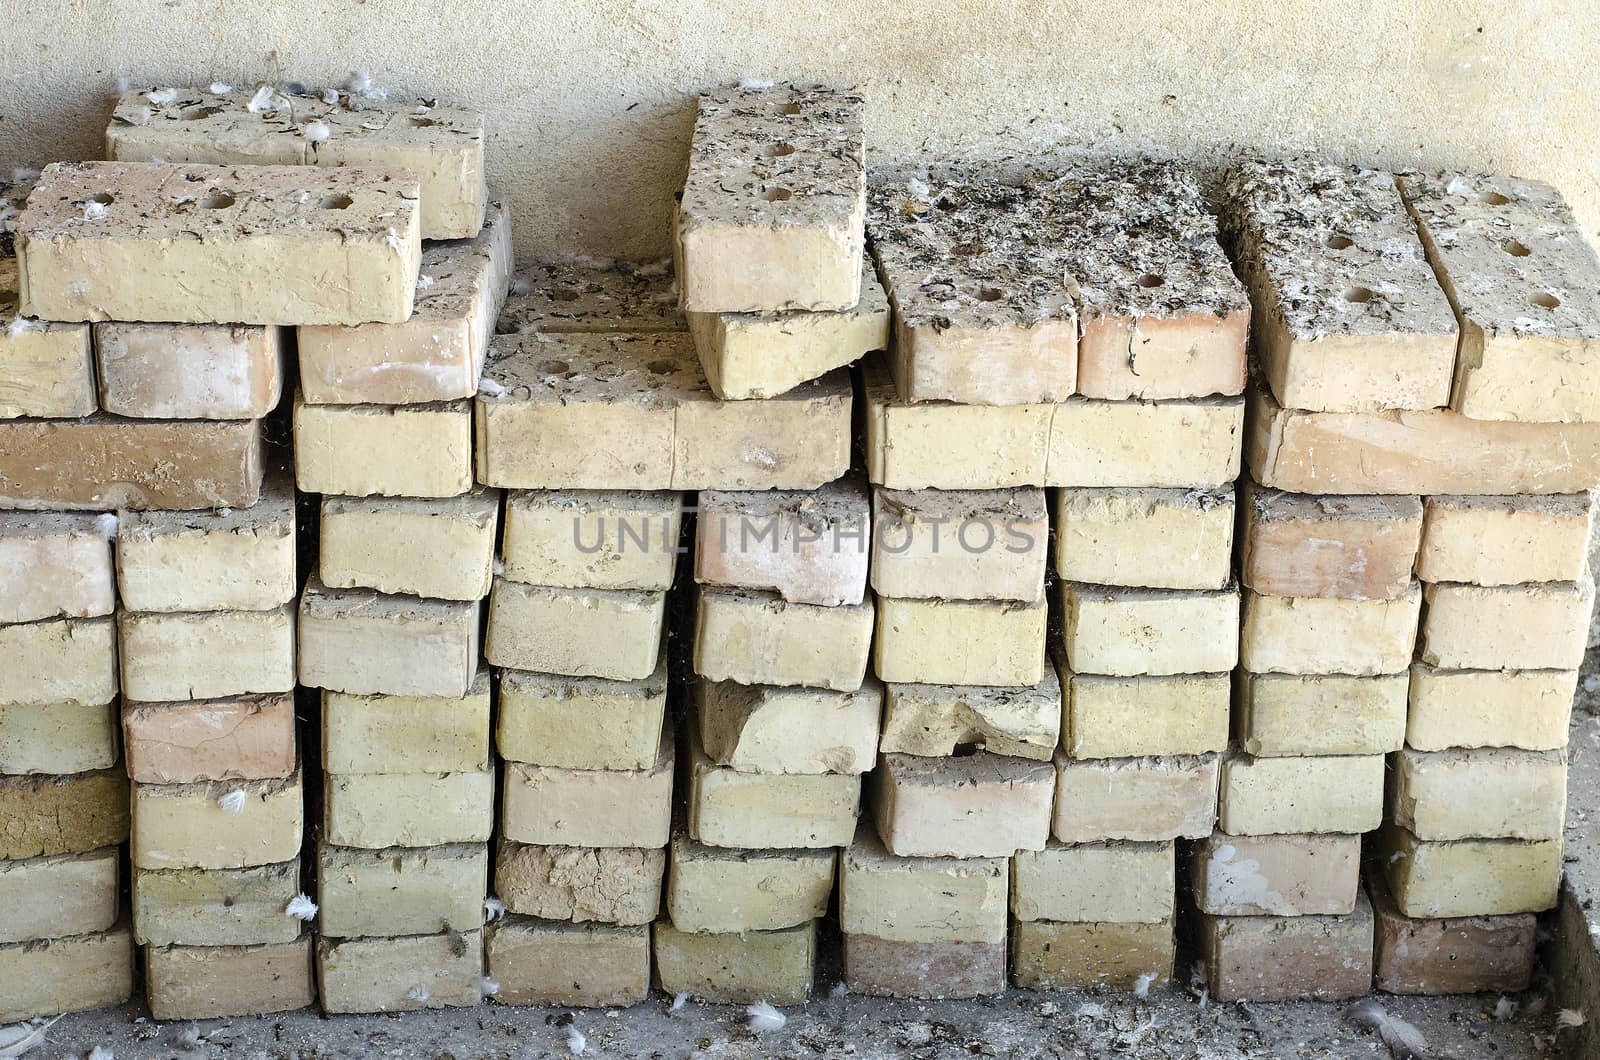 Pile of old bricks